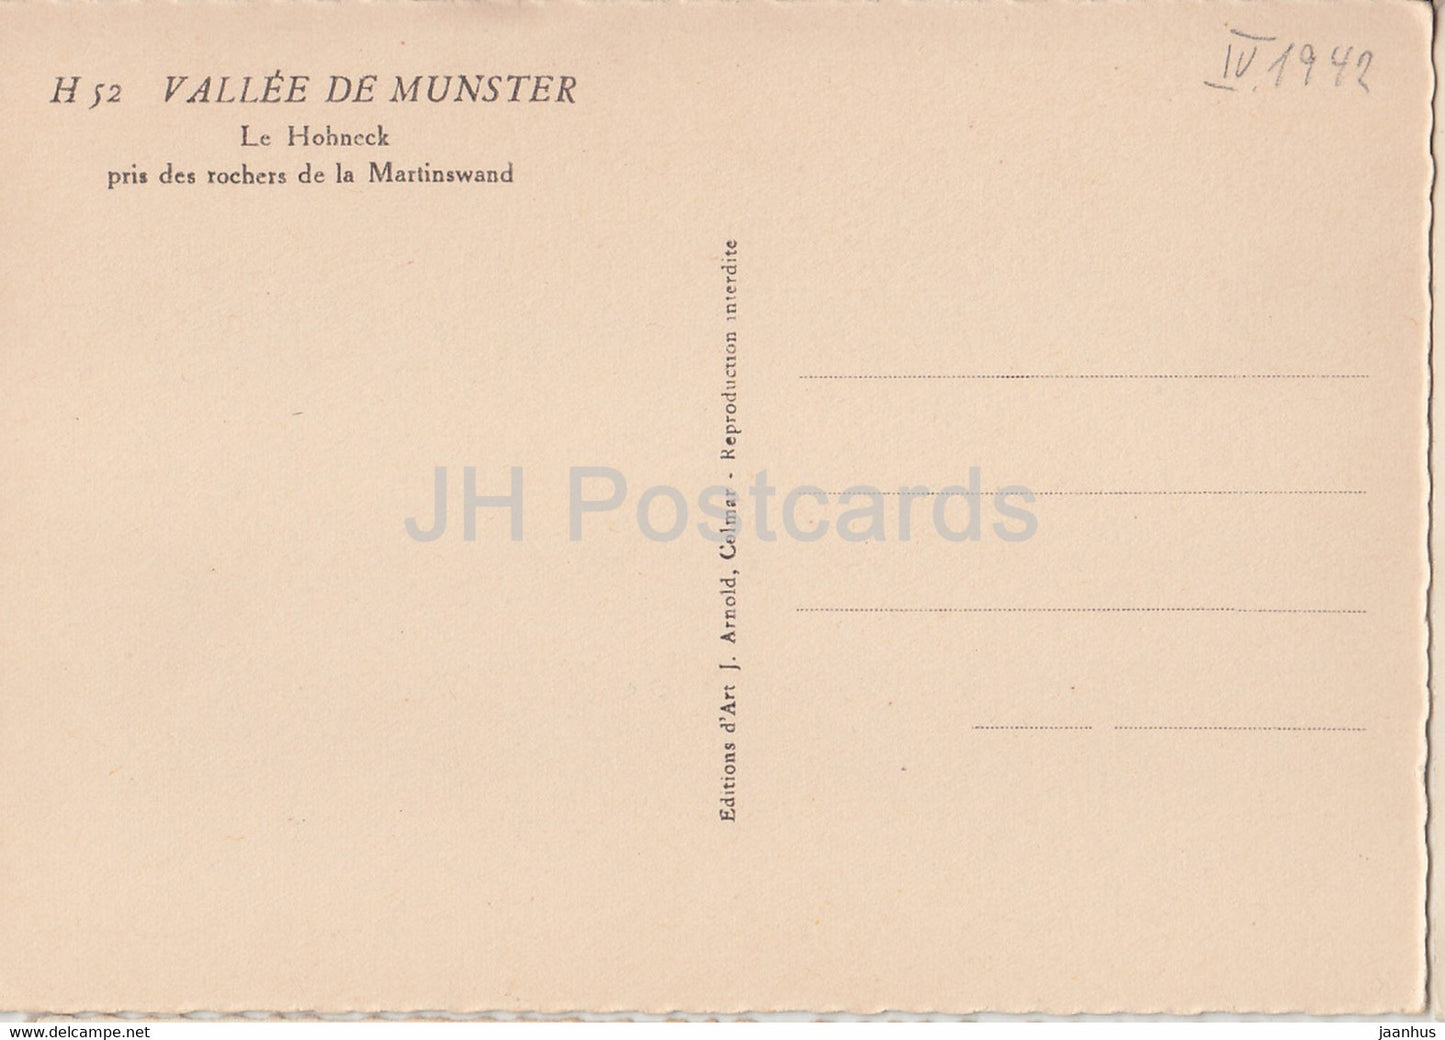 Vallee de Munster - Le Hohneck pris de rochers de la Martinswand - alte Postkarte - 1942 - Frankreich - unbenutzt